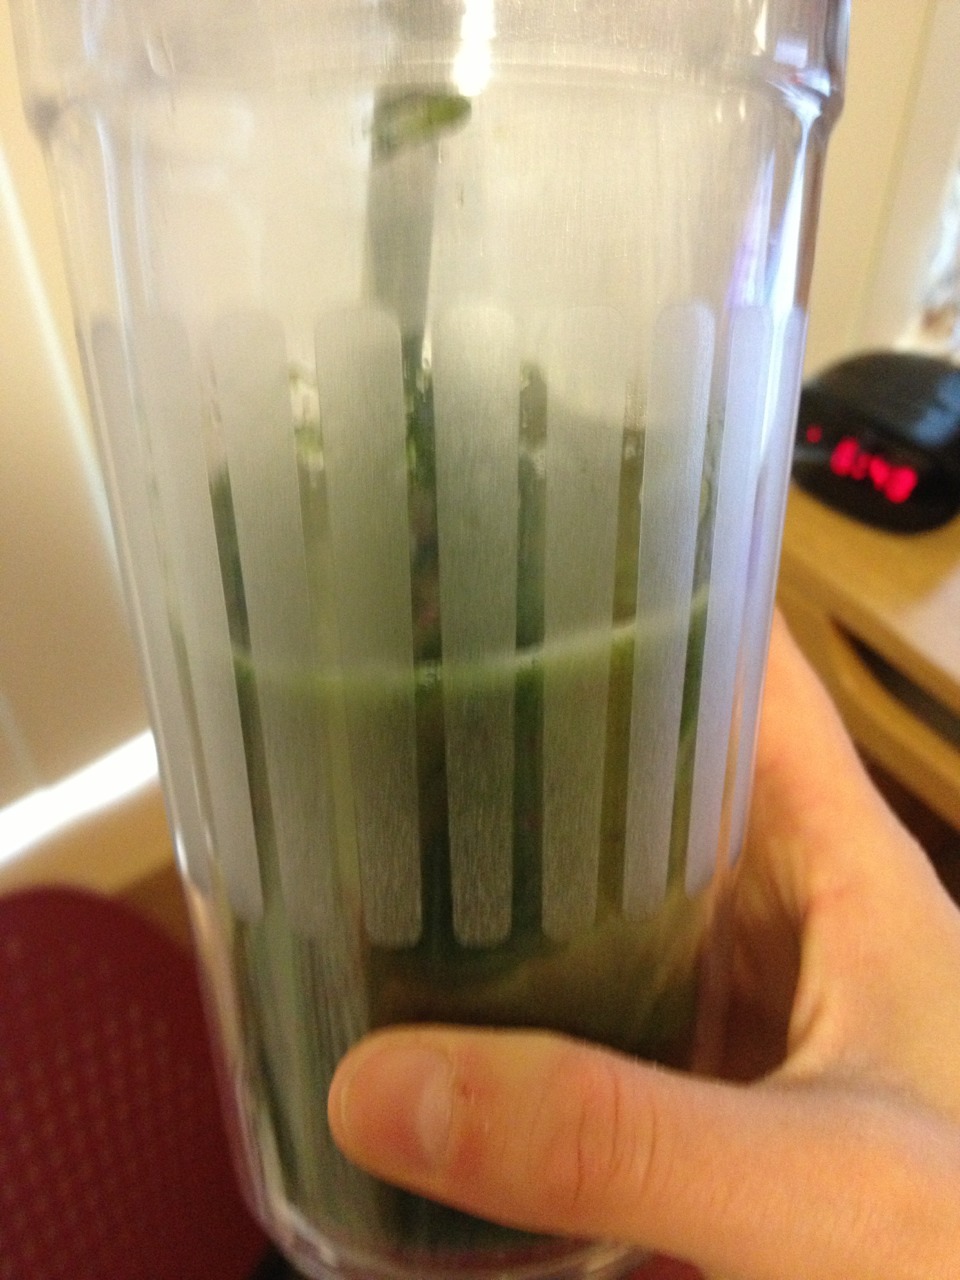 Switching up the breakfast. Kale, apple, banana, and EnergyBits (spirulina).